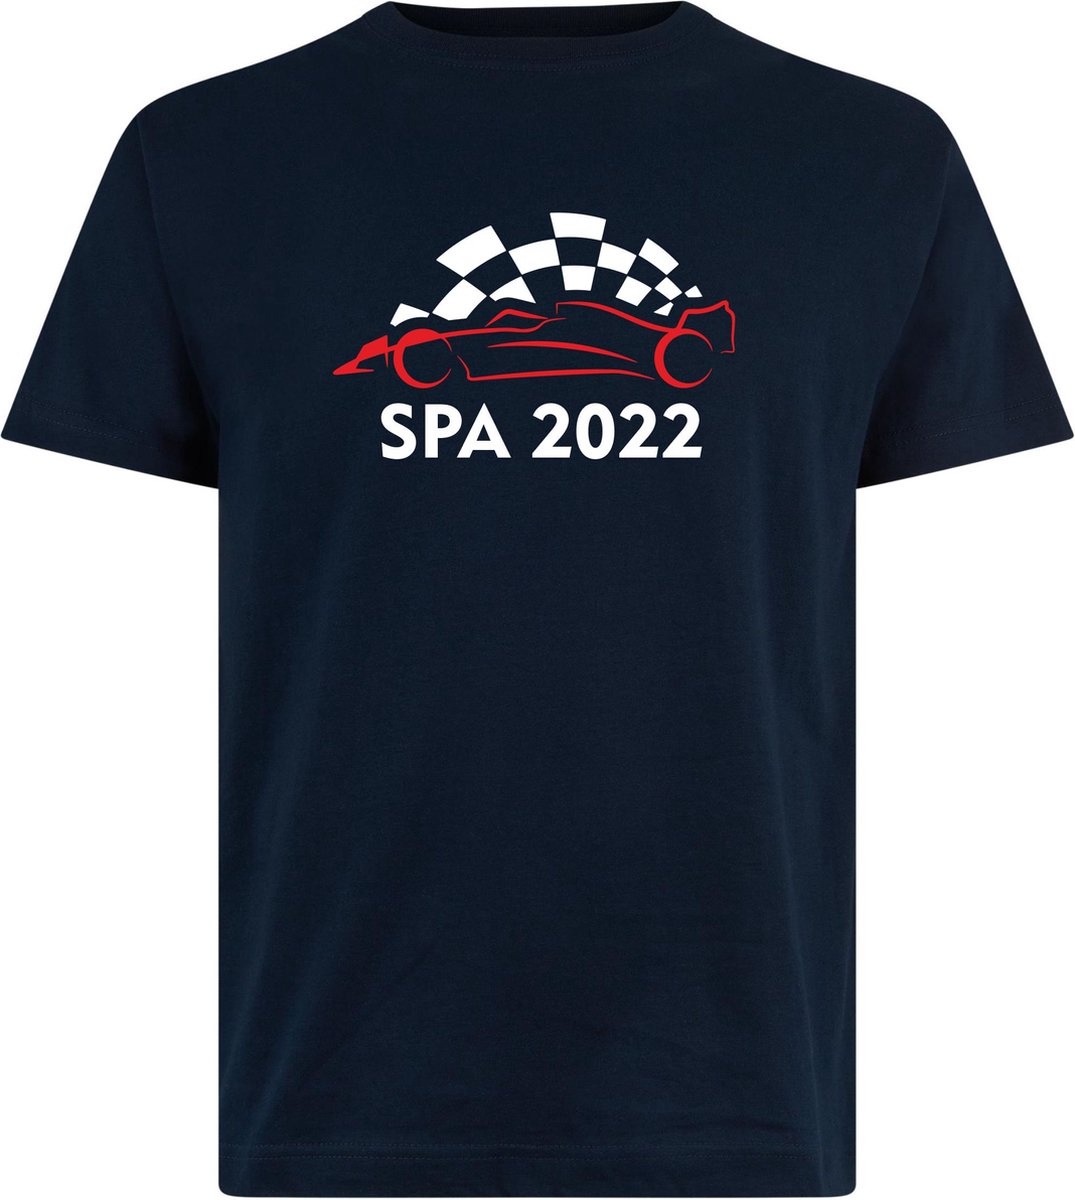 T-shirt Spa 2022 met raceauto | Max Verstappen / Red Bull Racing / Formule 1 fan | Grand Prix Circuit Spa-Francorchamps | kleding shirt | Navy | maat L